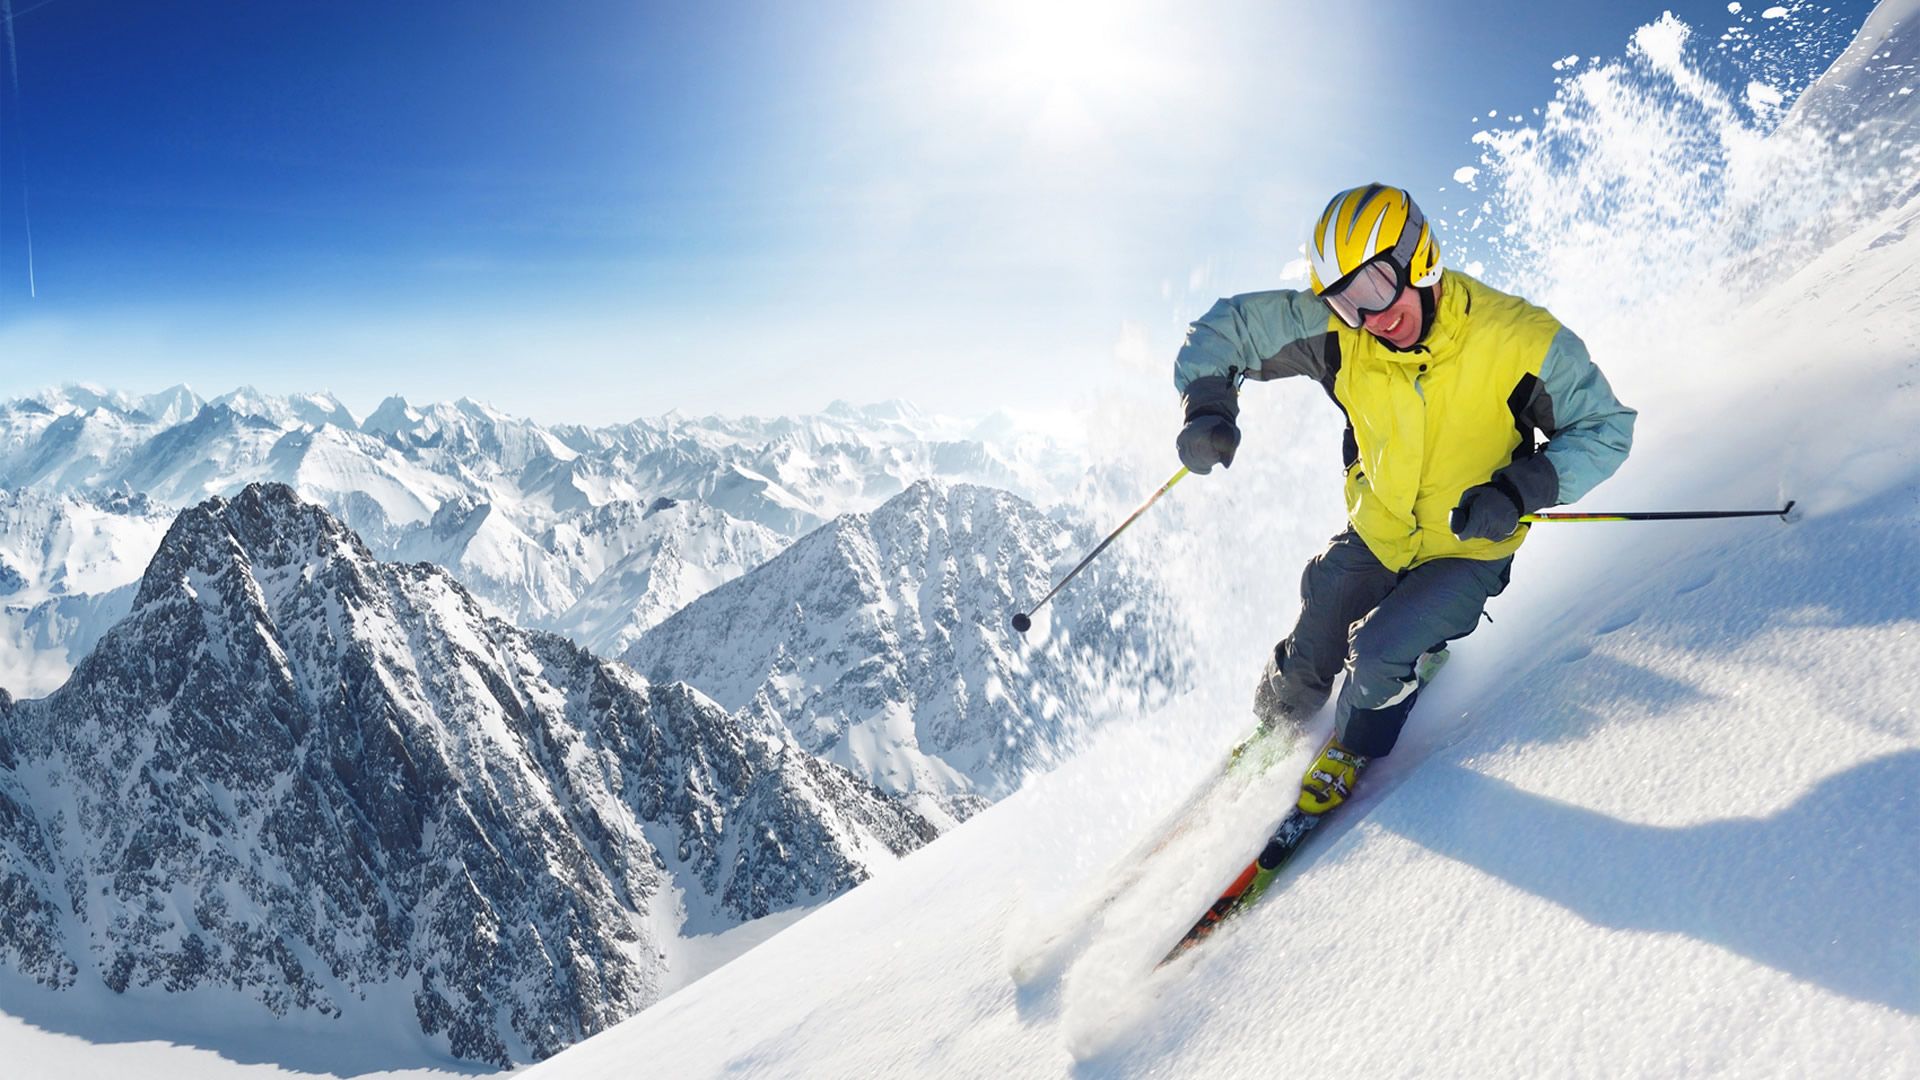 Skiing Desktop Wallpapers, Skiing Background, New Backgrounds